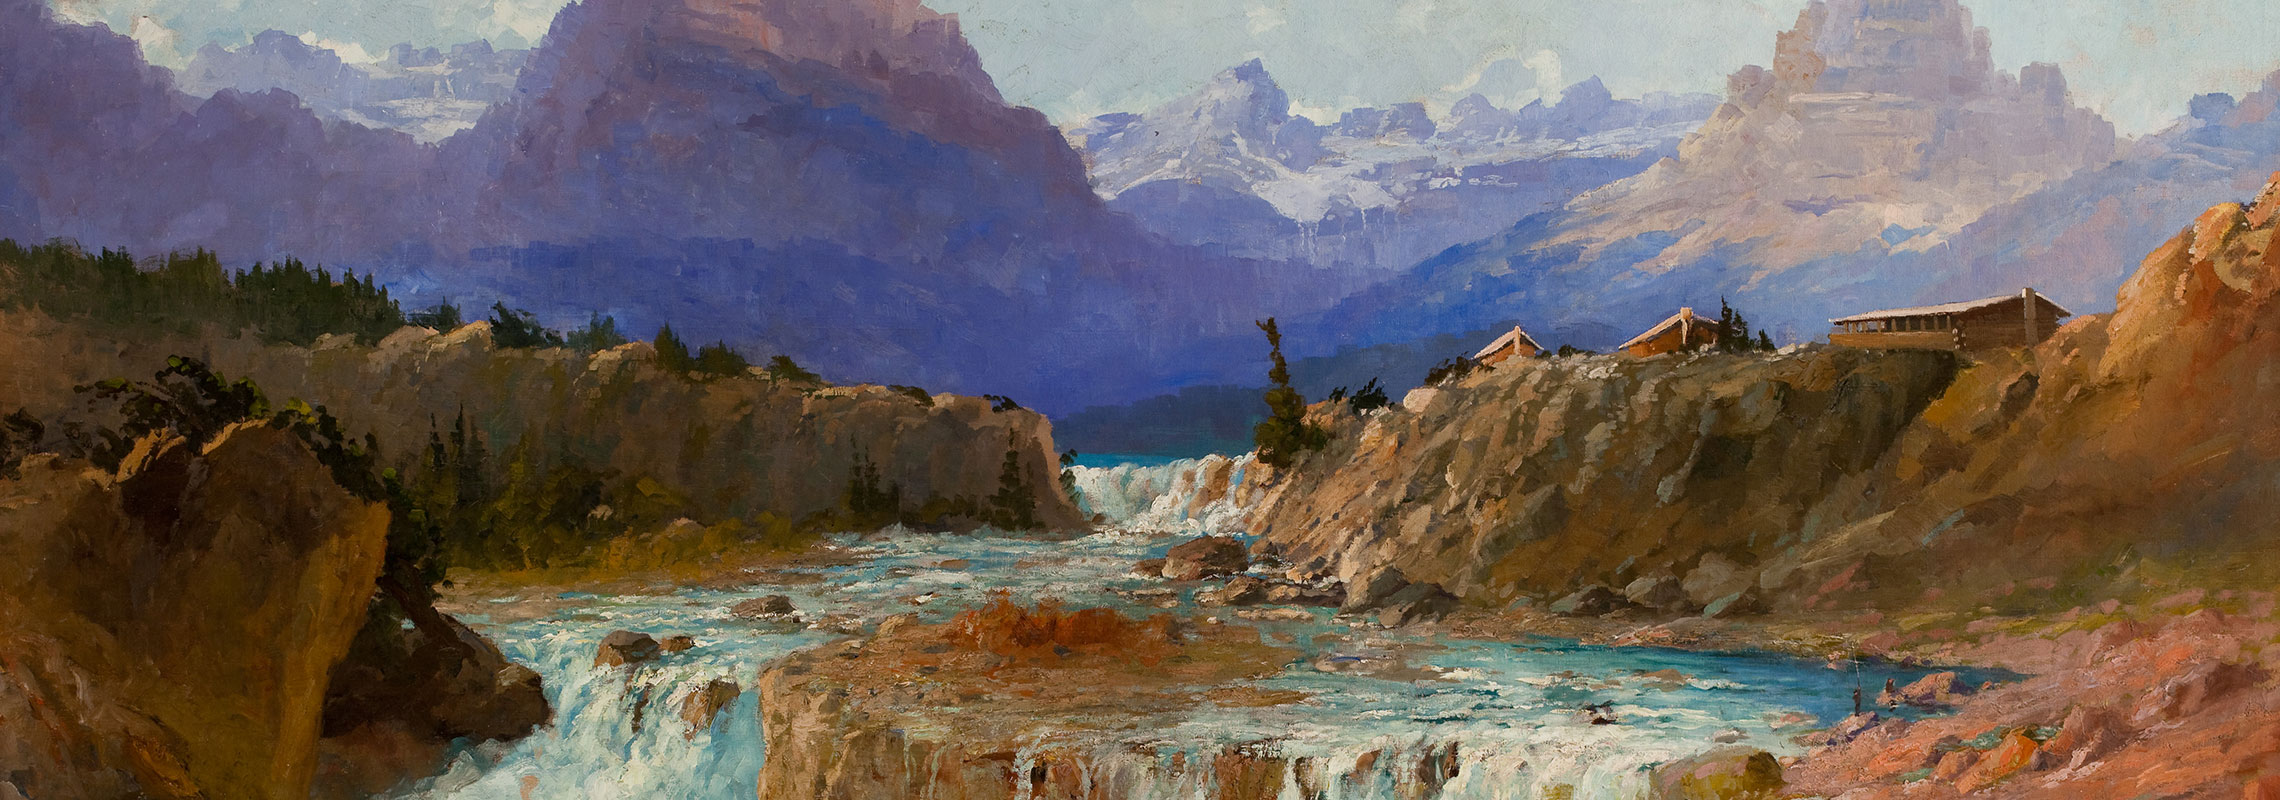 John Fery: Artist of Glacier National Park & the American West